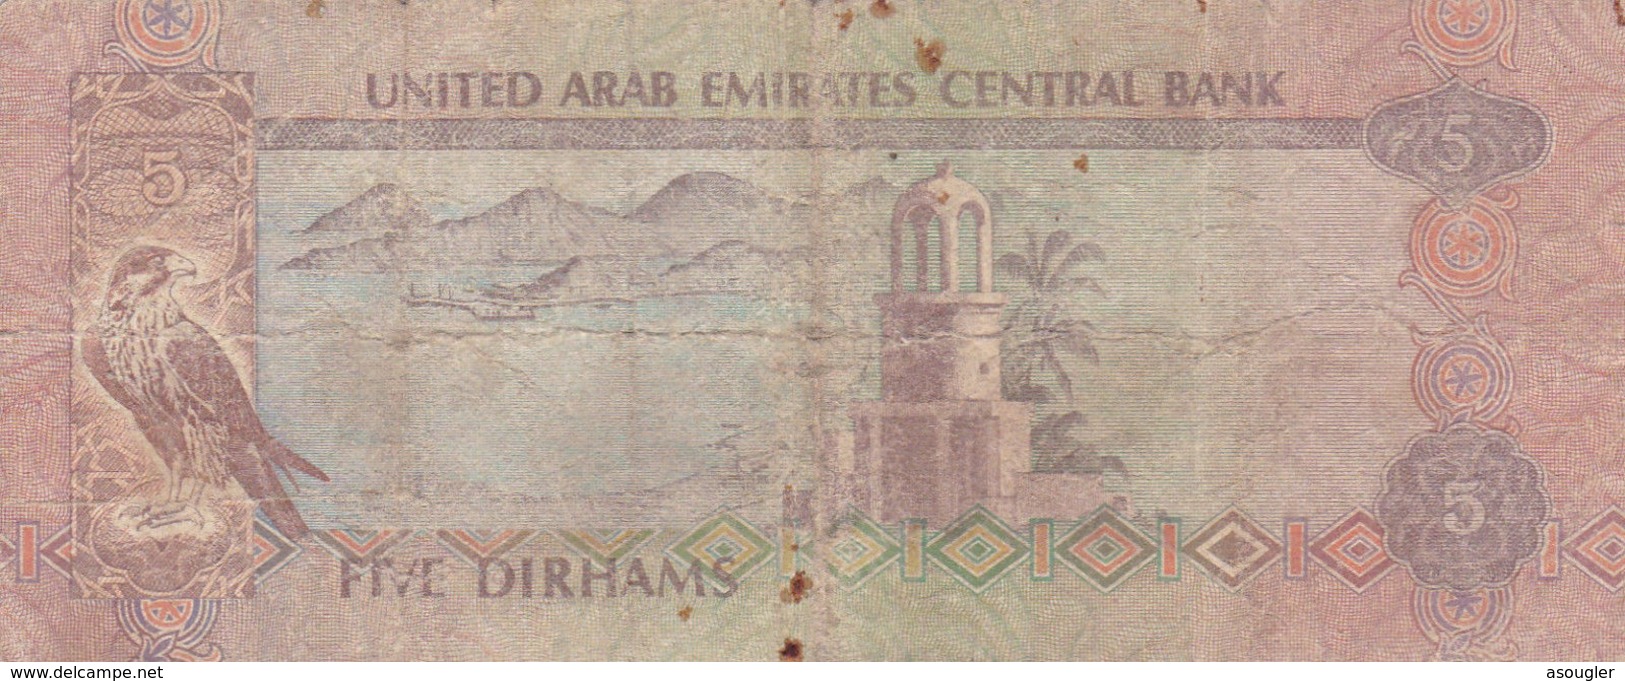 UNITED ARAB EMIRATES UAE 5 DIRHAMS ND 1982 P-7a G "free Shipping Via Regular Air Mail (buyer Risk)" - United Arab Emirates